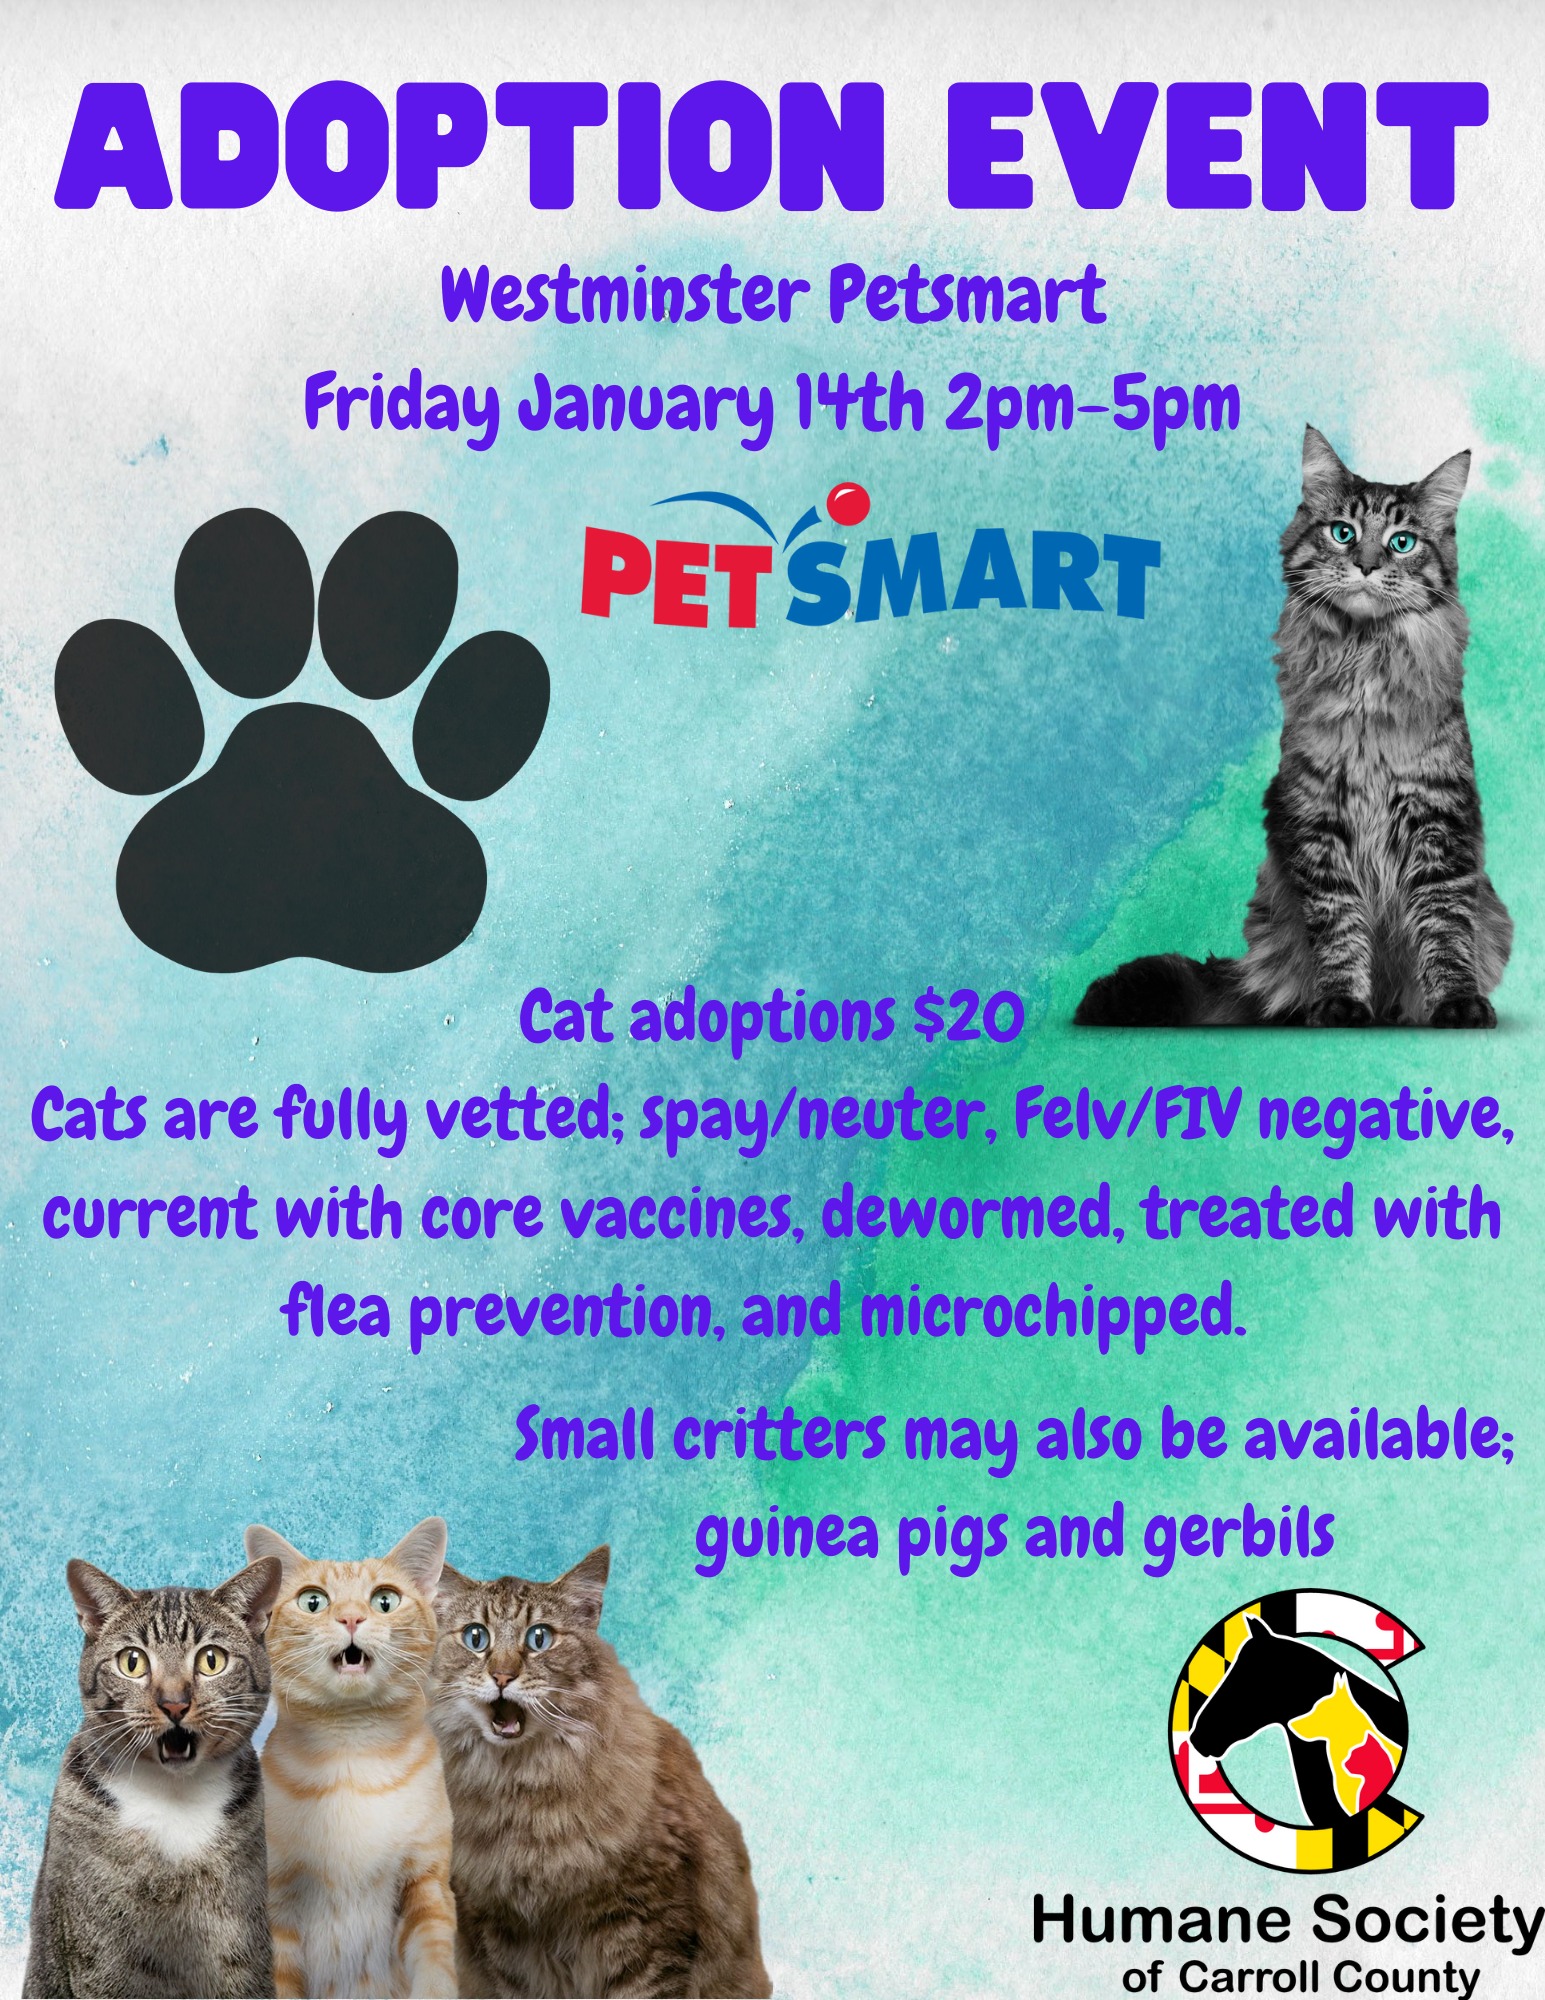 PetSmart Adoption Event Tickets, Multiple Dates